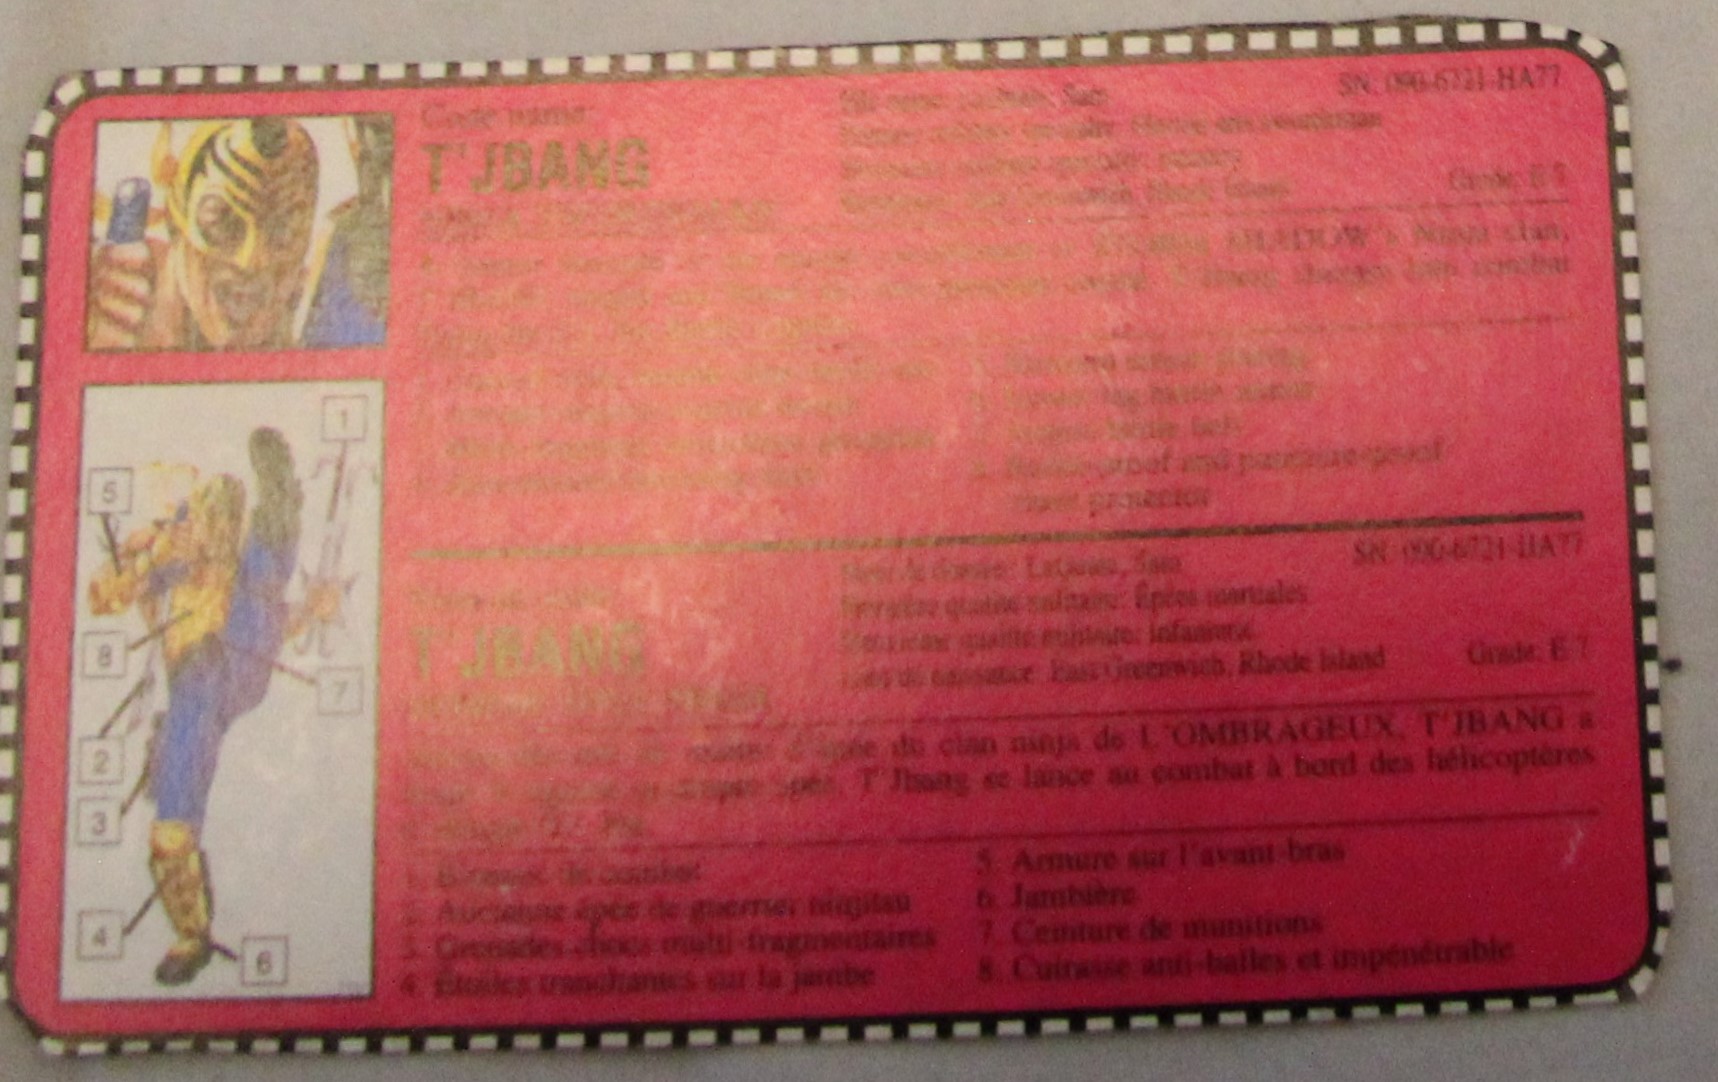 1992 tjbang file card